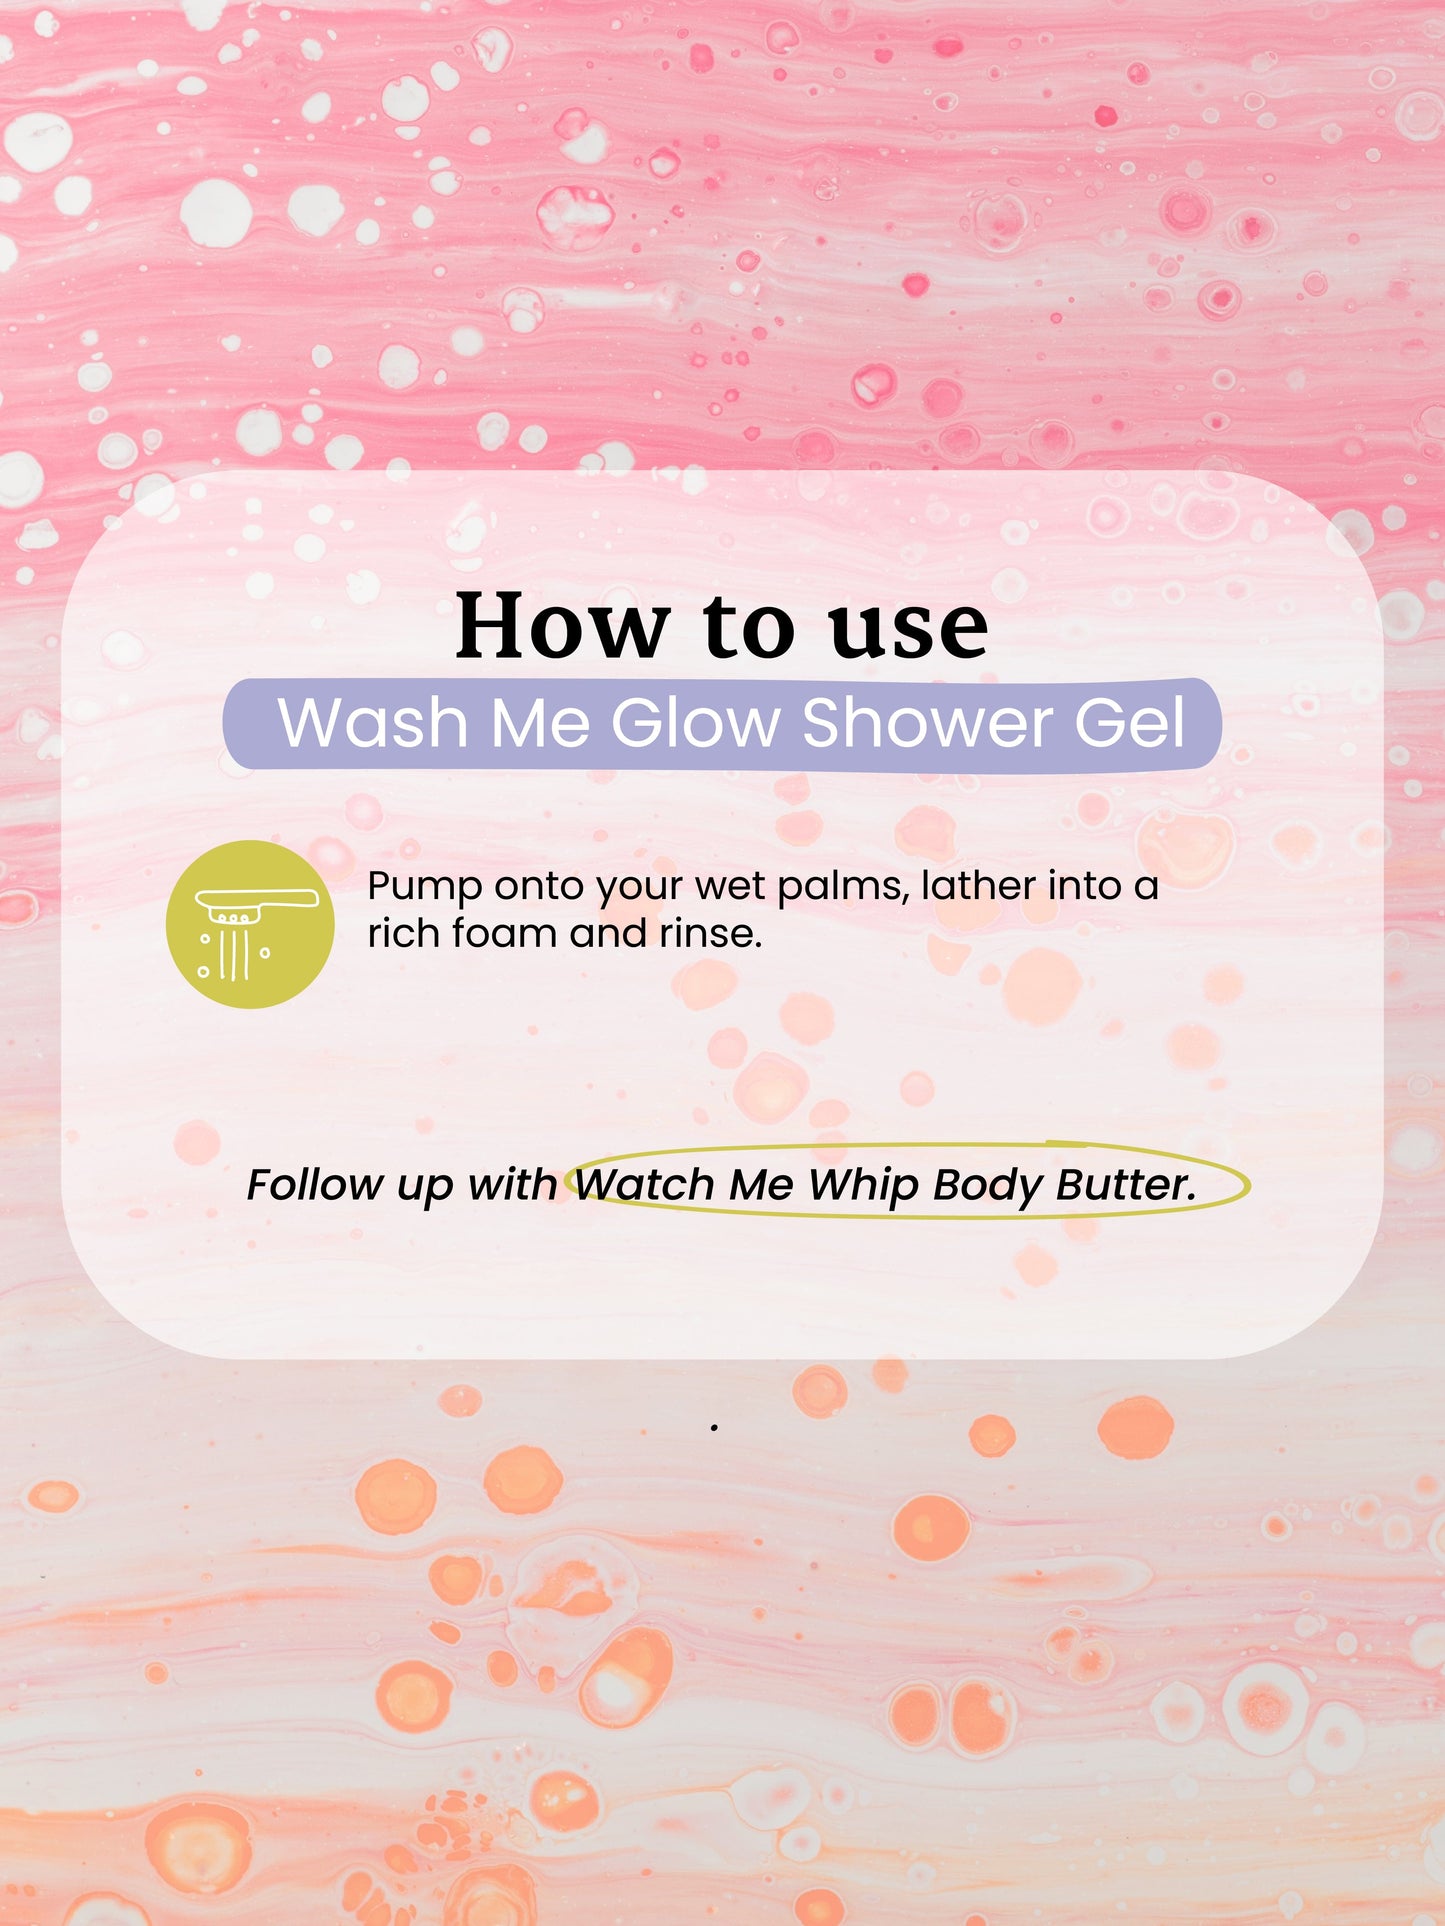 Wash Me Glow Shower Gel